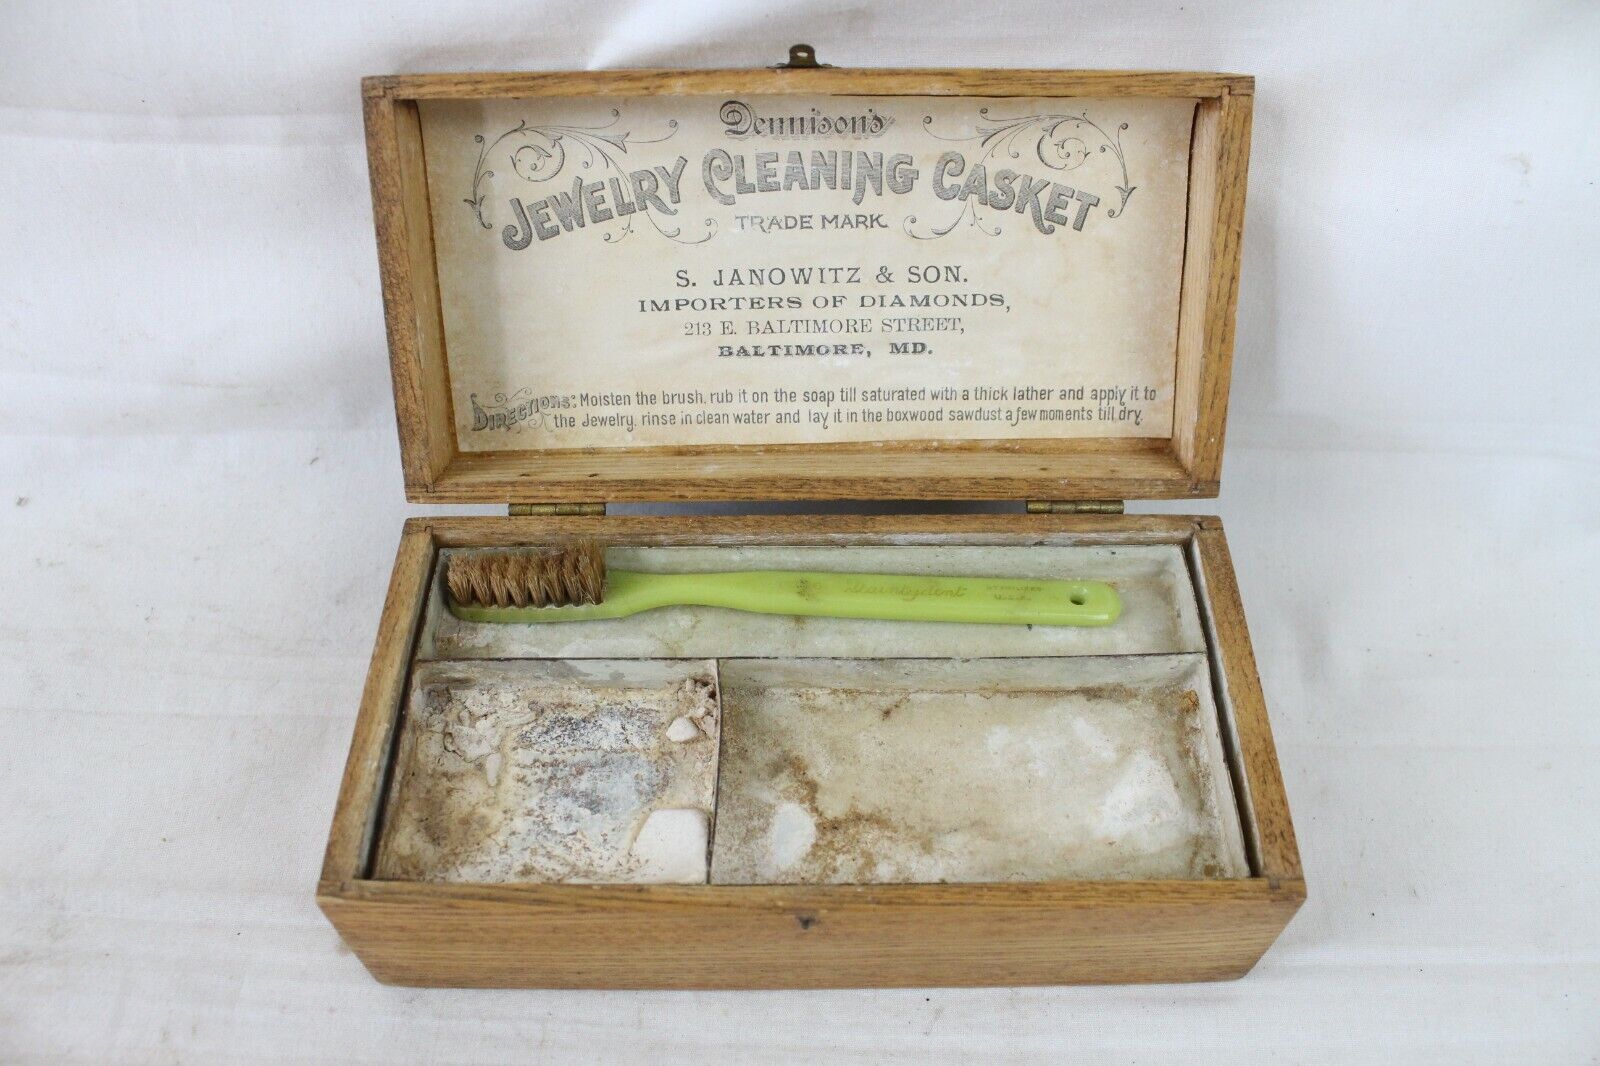 Vintage Antique Cleaning Casket Dennison\'s Jewelry Cleaning Casket Wooden Box